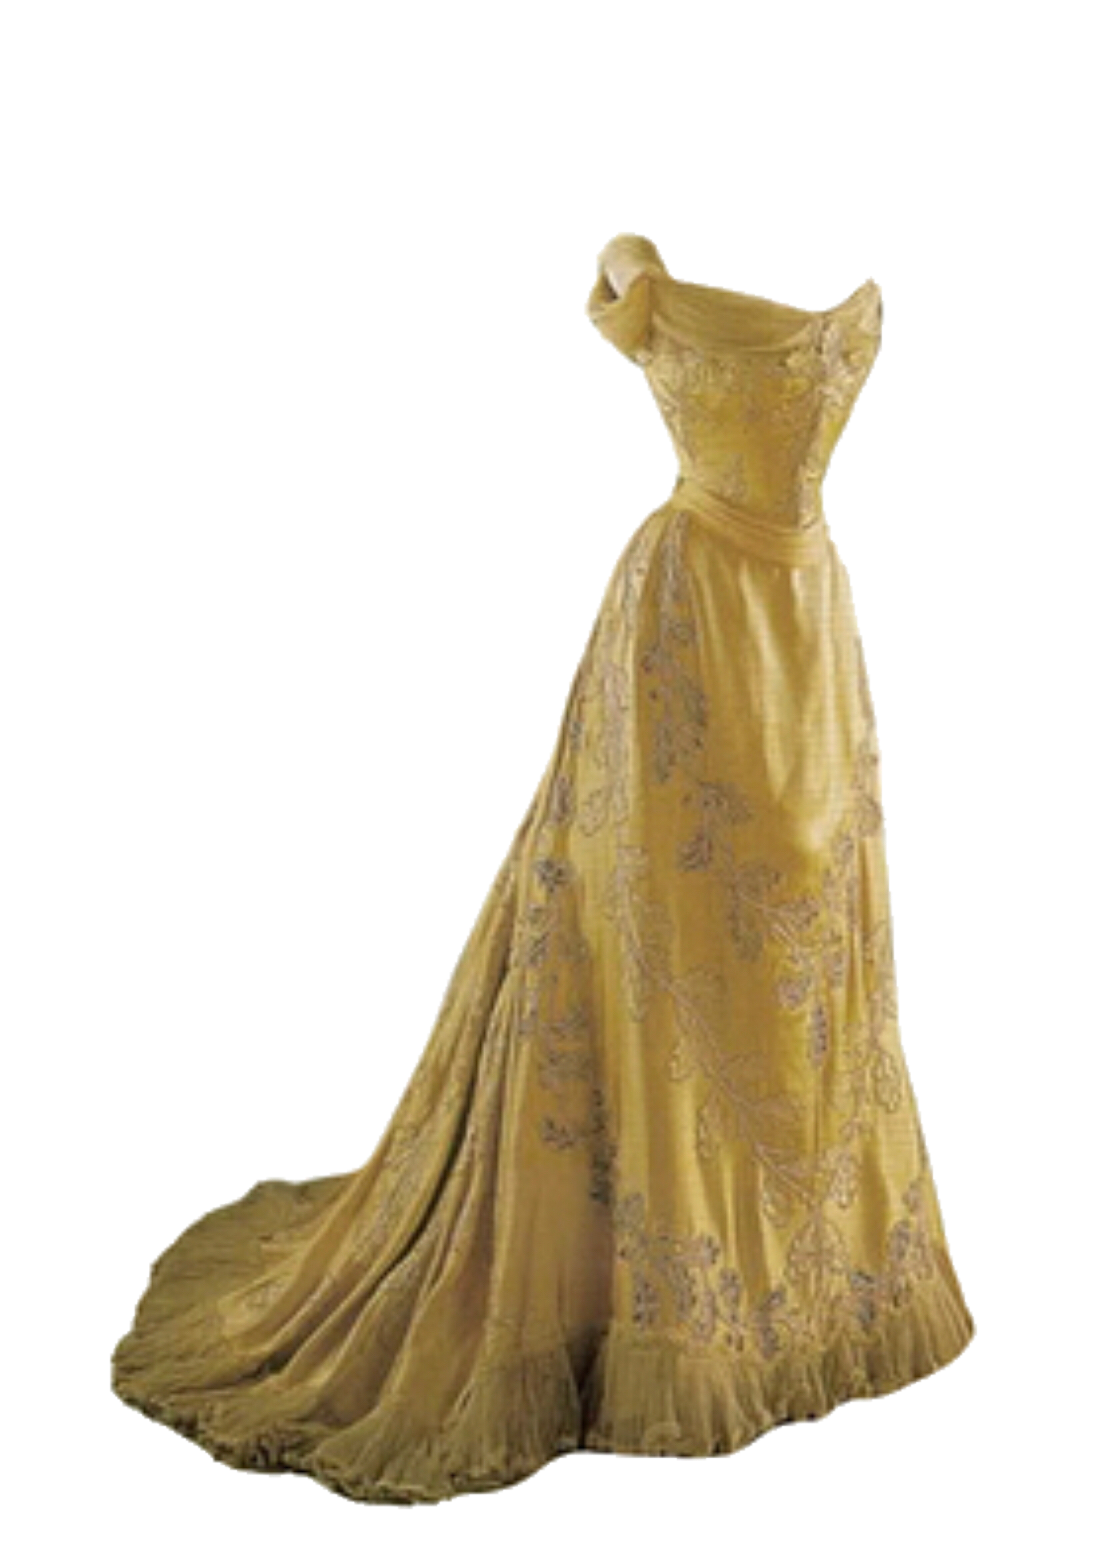 Fille longue robe PNG Image Transparente